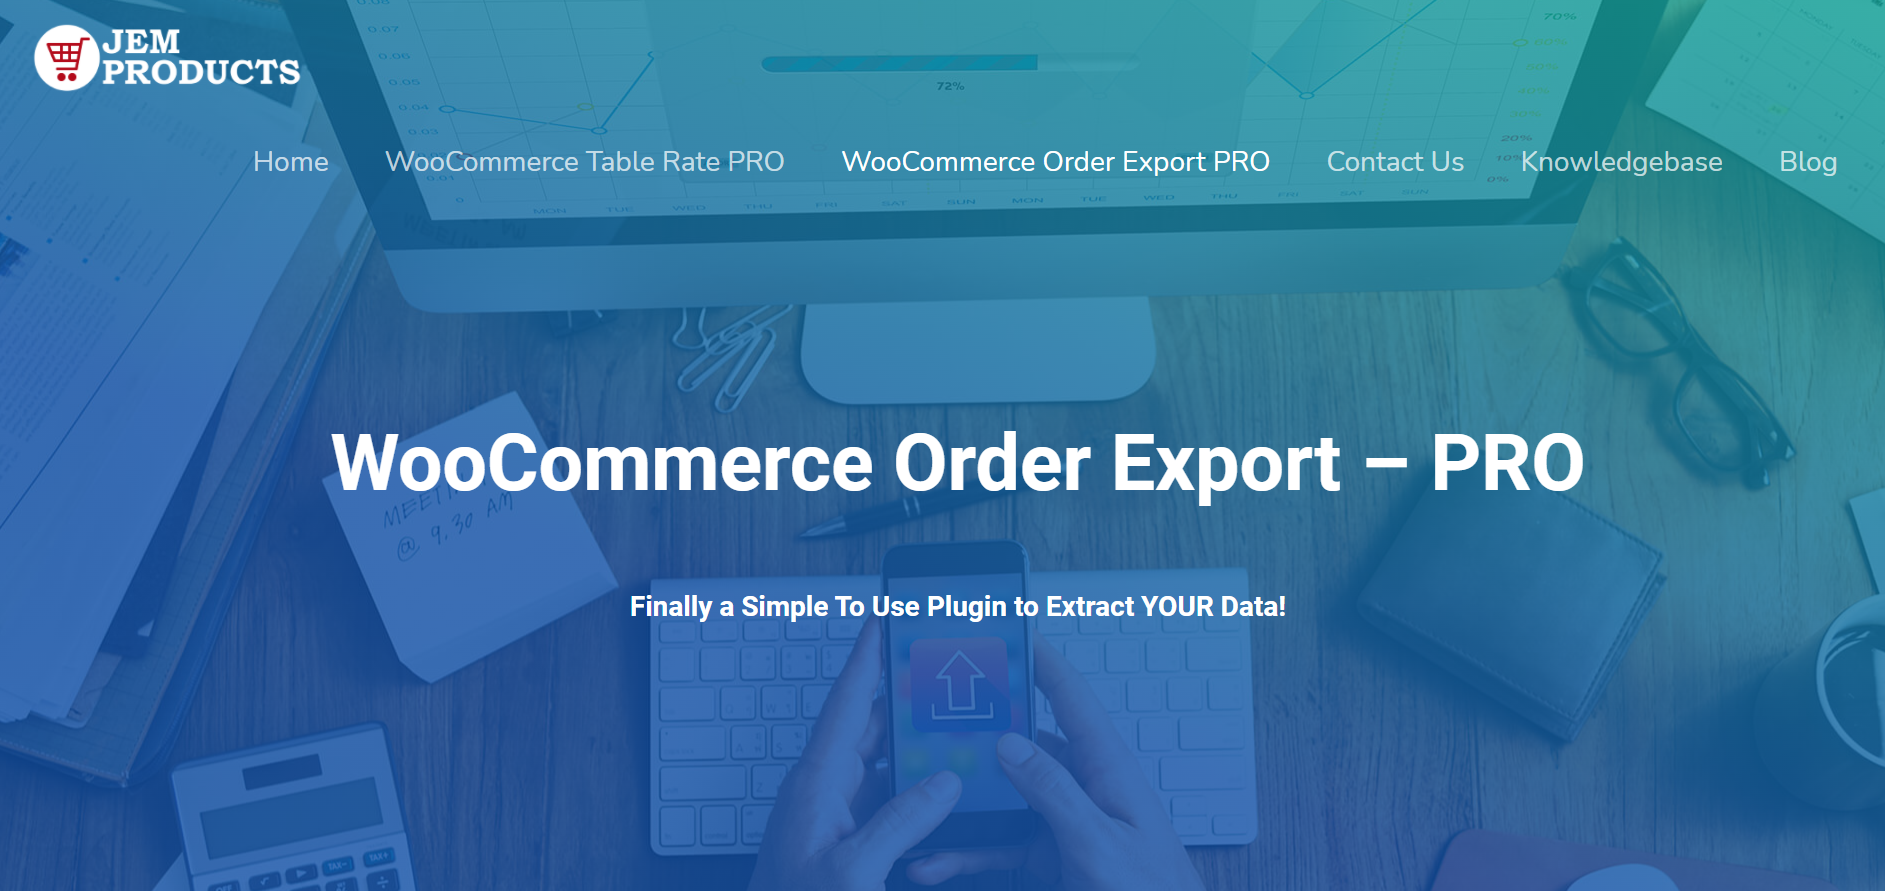 WooCommerce Order Export Pro homepage